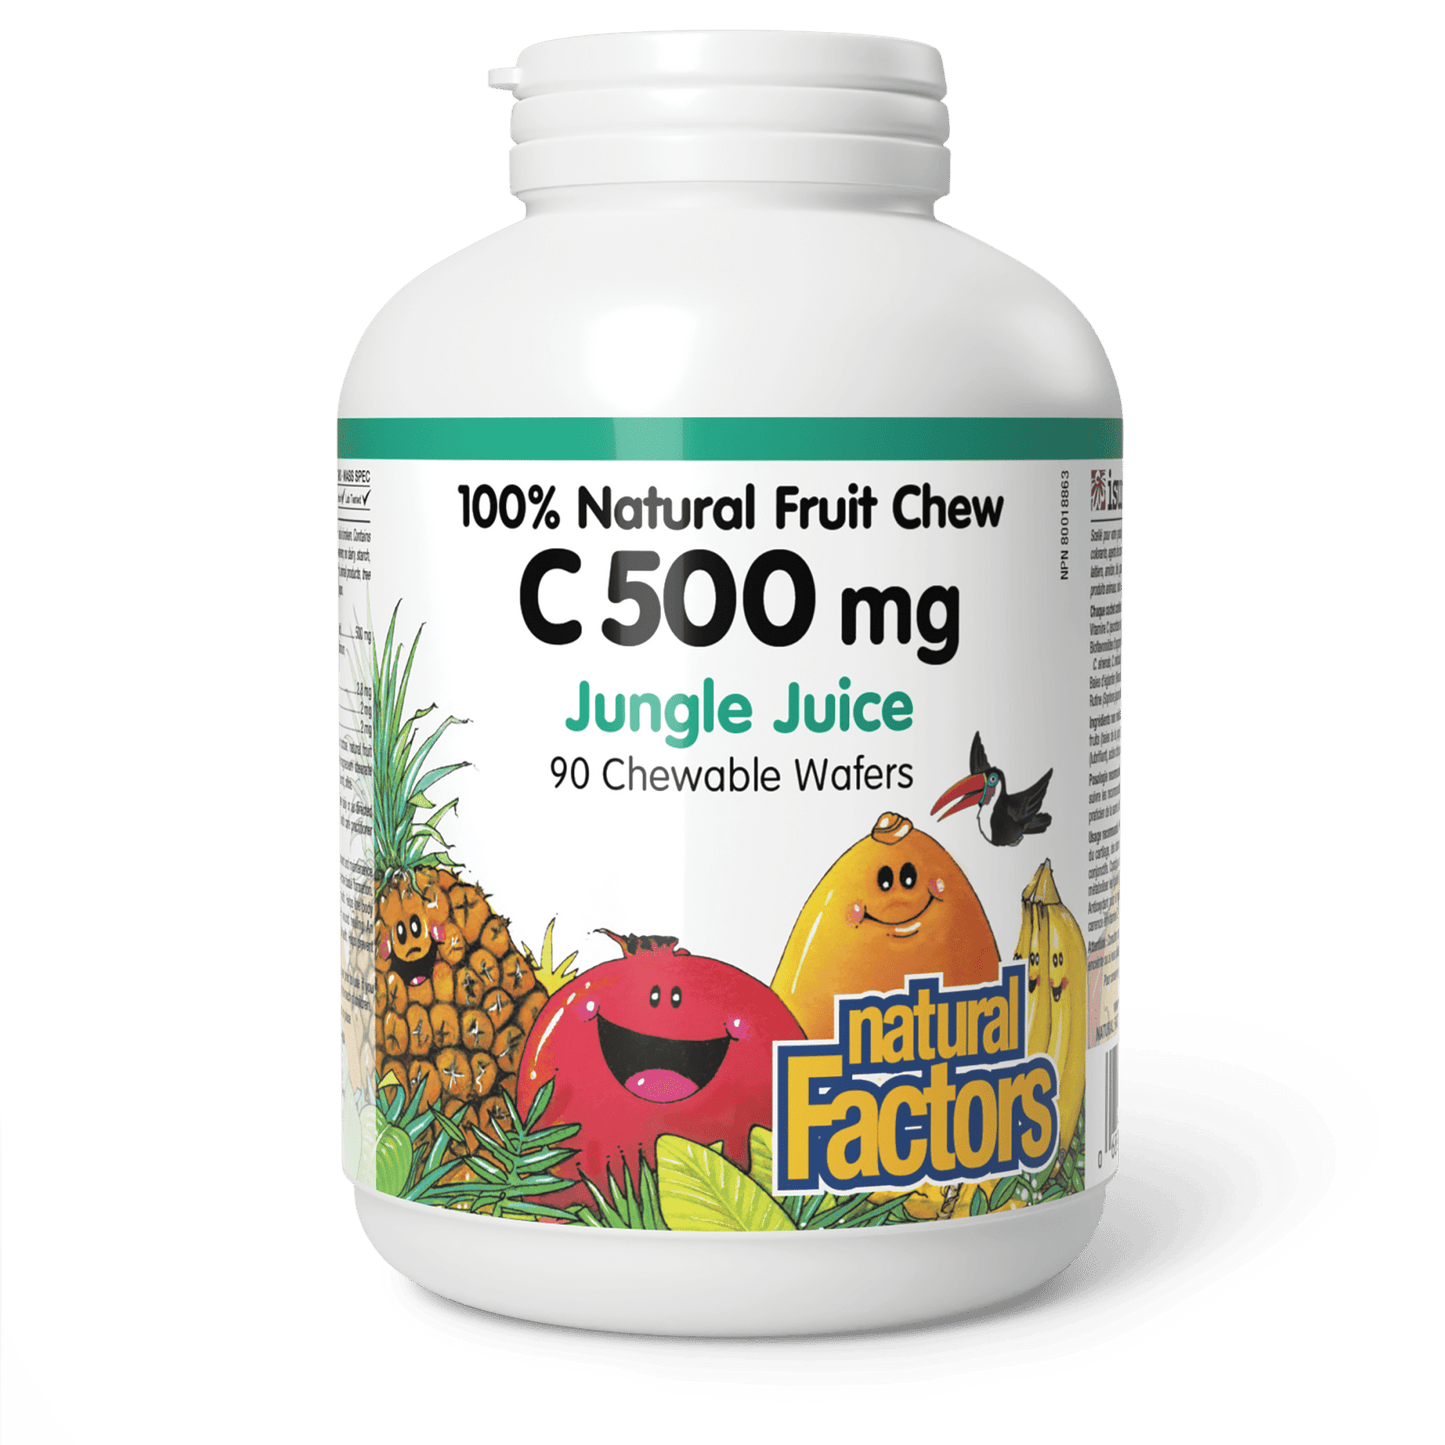 C 500 mg 100% Natural Fruit Chew, Jungle Juice, Natural Factors|v|image|1328